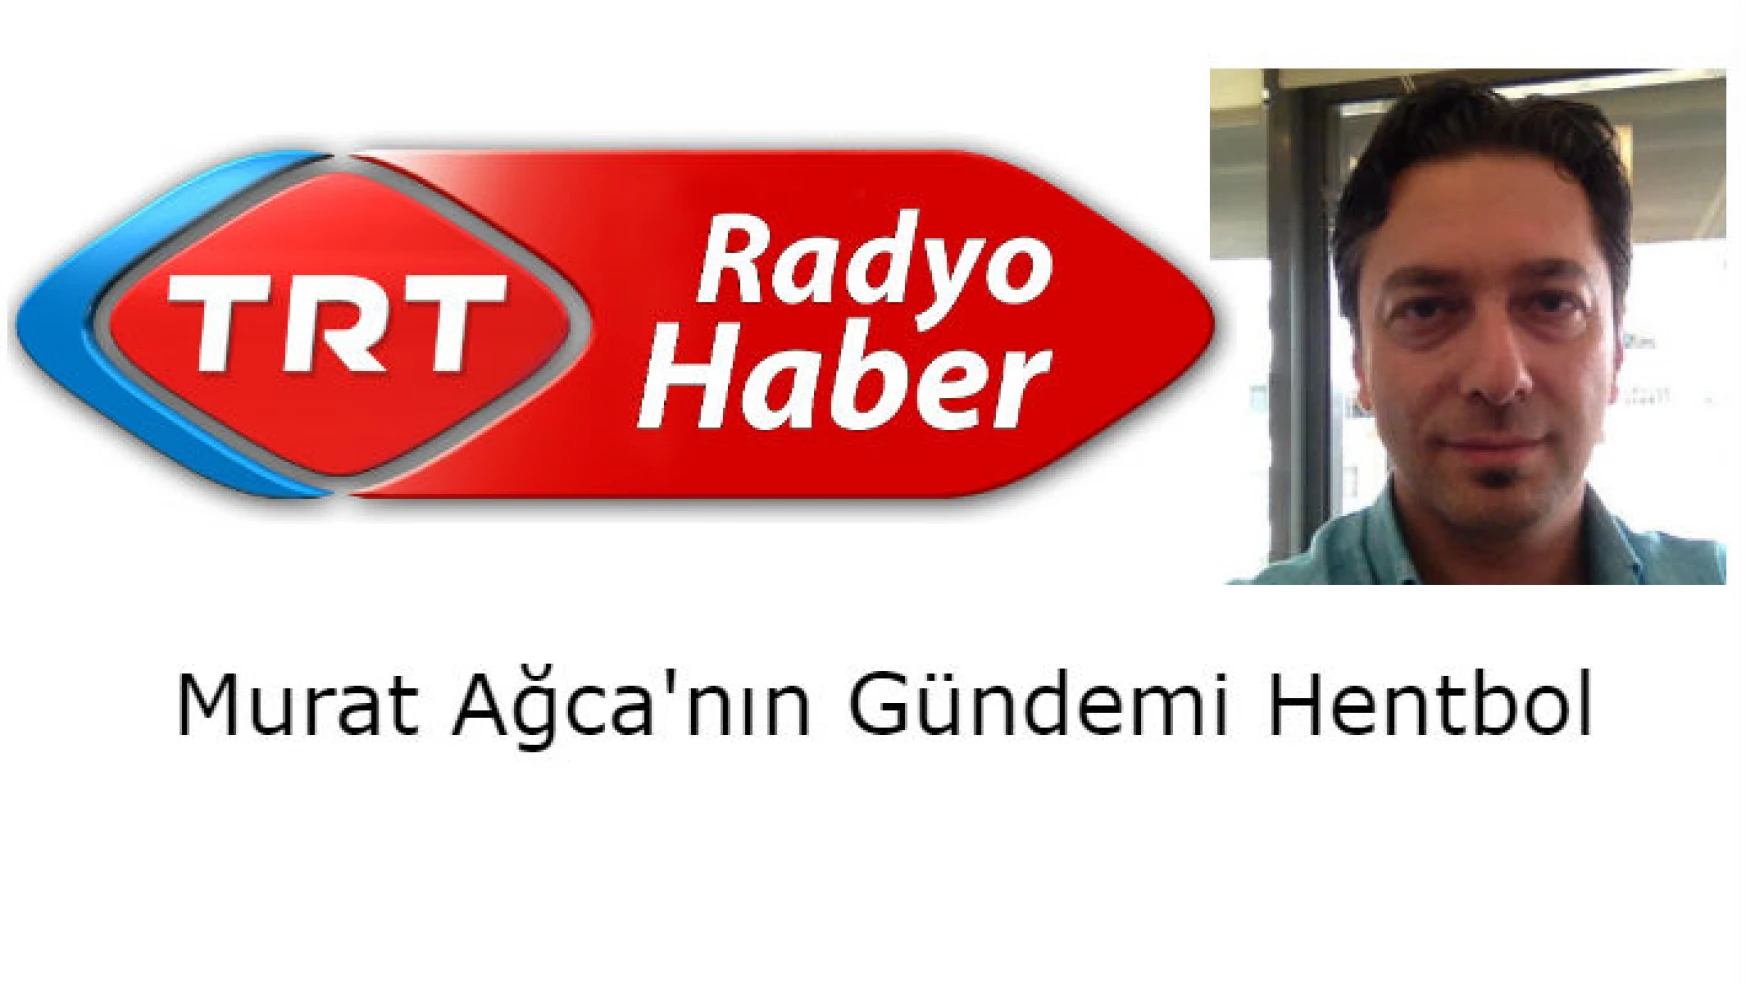 TRT Haber Radyo’da hentbol konuşulacak